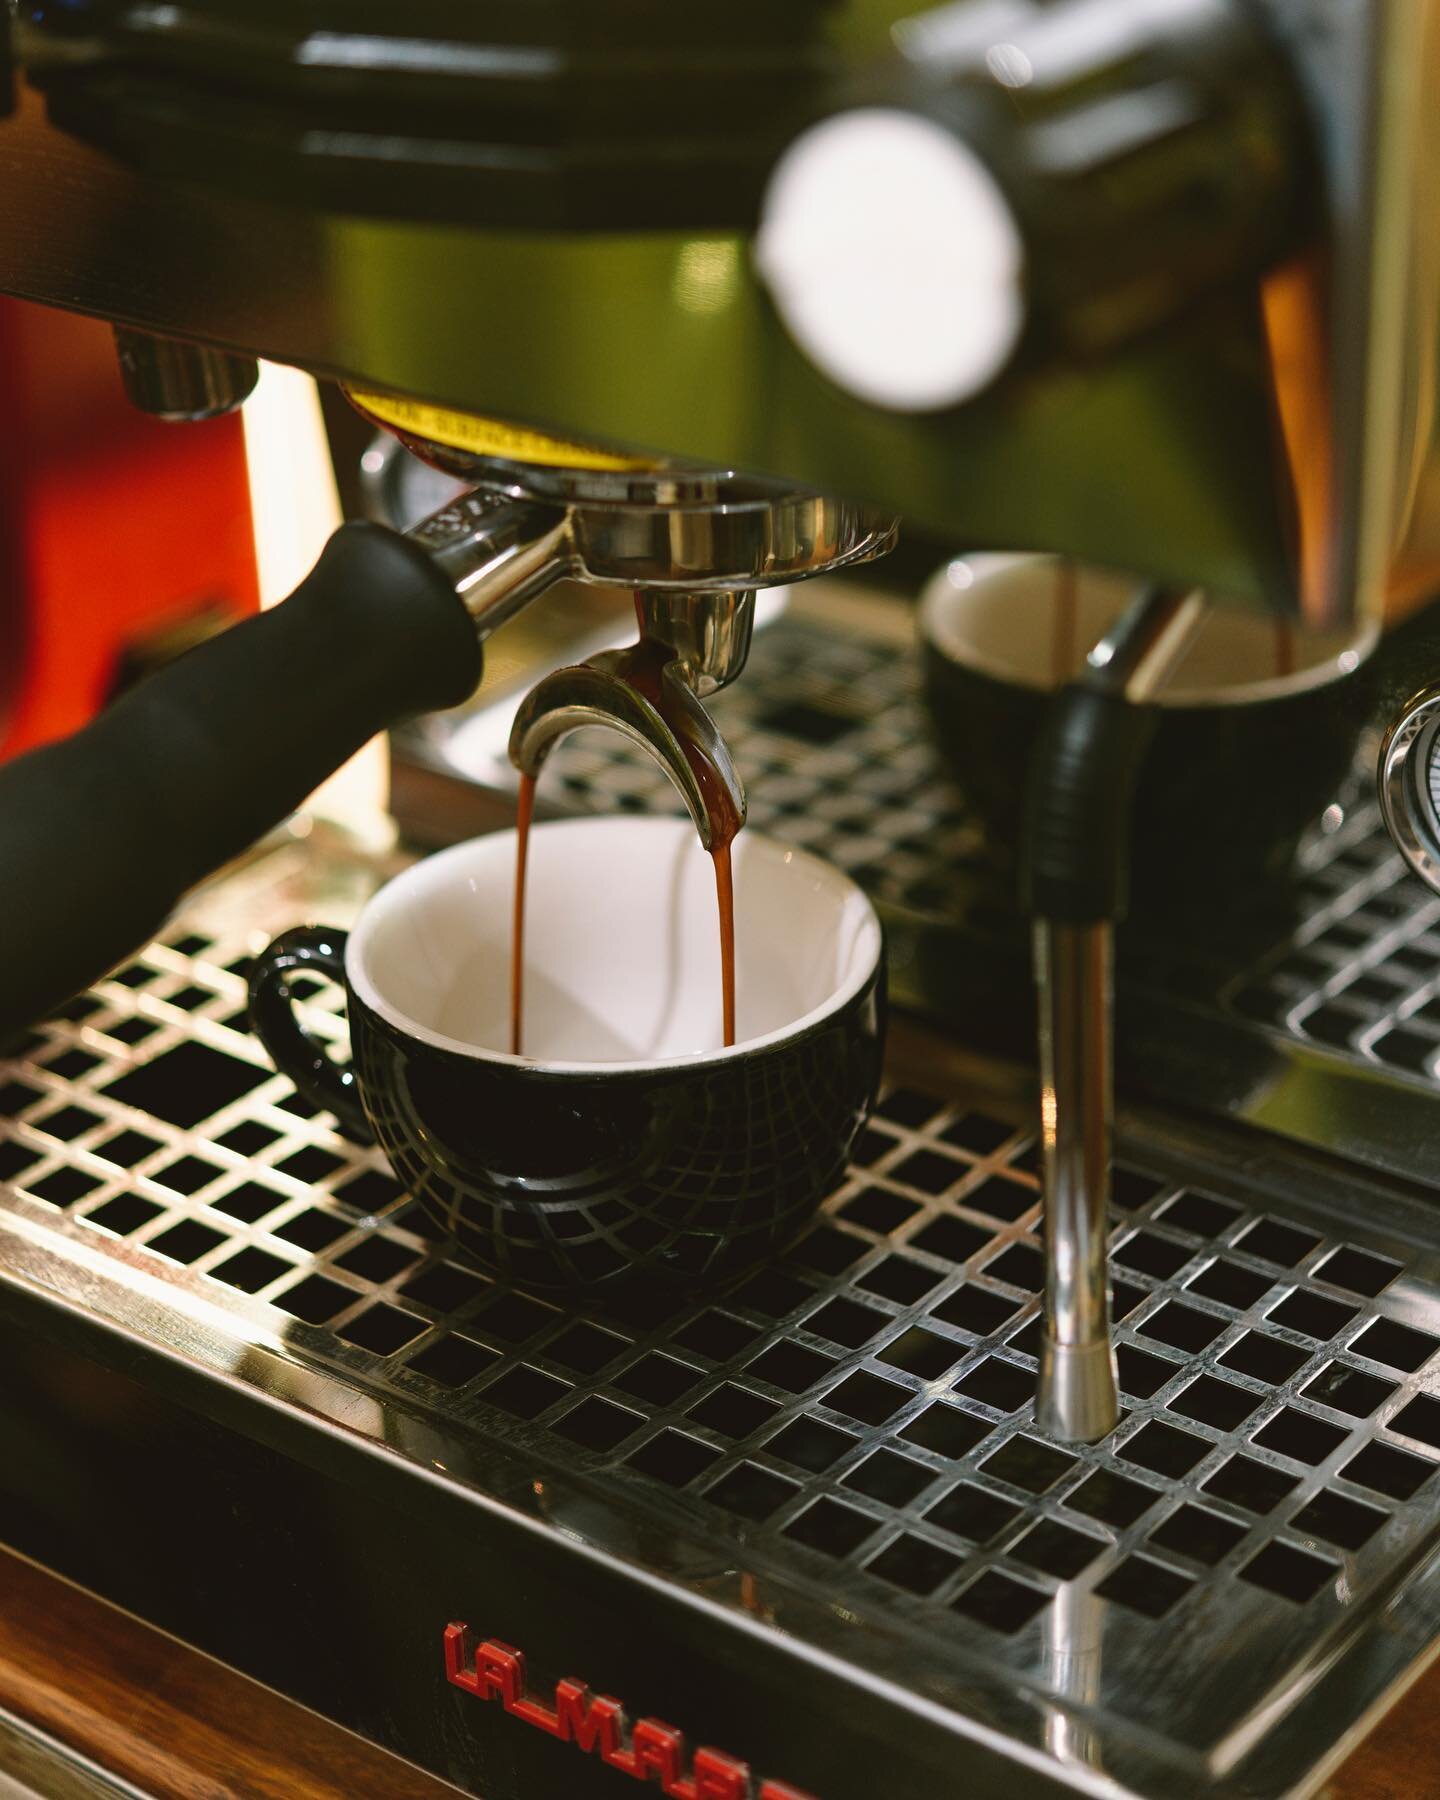 M 🌞 N D A Y in paradise 🌴 

Head on over for a cup of 🚀 ⛽️ before you take on the day 💪

We are open from 8am!
.
.
.
.
.
#cafekumbuk #lamarzoccolineamini #lamarzocco #srilanka #coffeetime #coffee #srilankadaily #lka #cmb #templegroundscoffee #sri